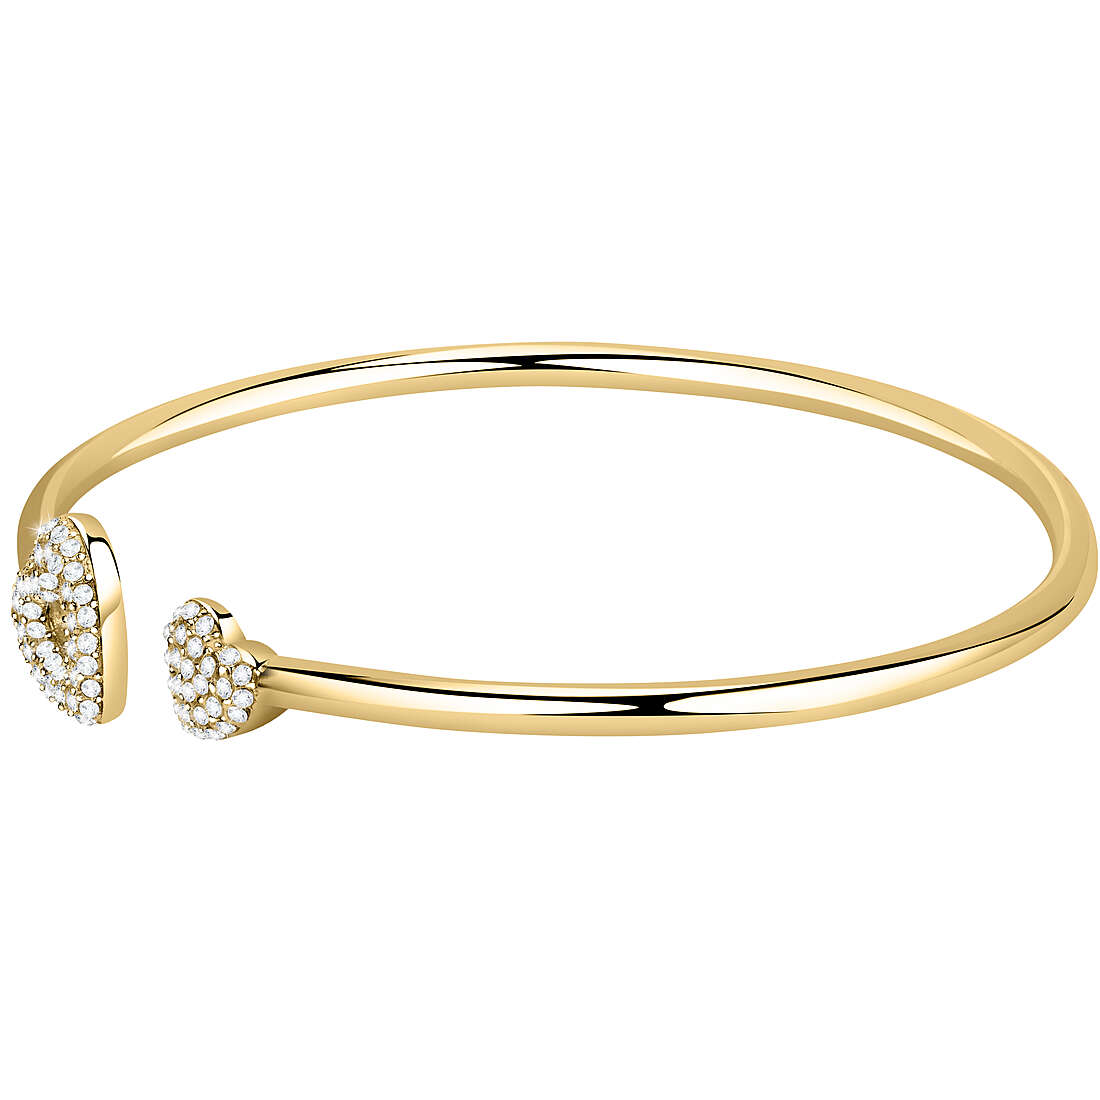 bracelet woman jewellery Morellato Incontri SAUQ02